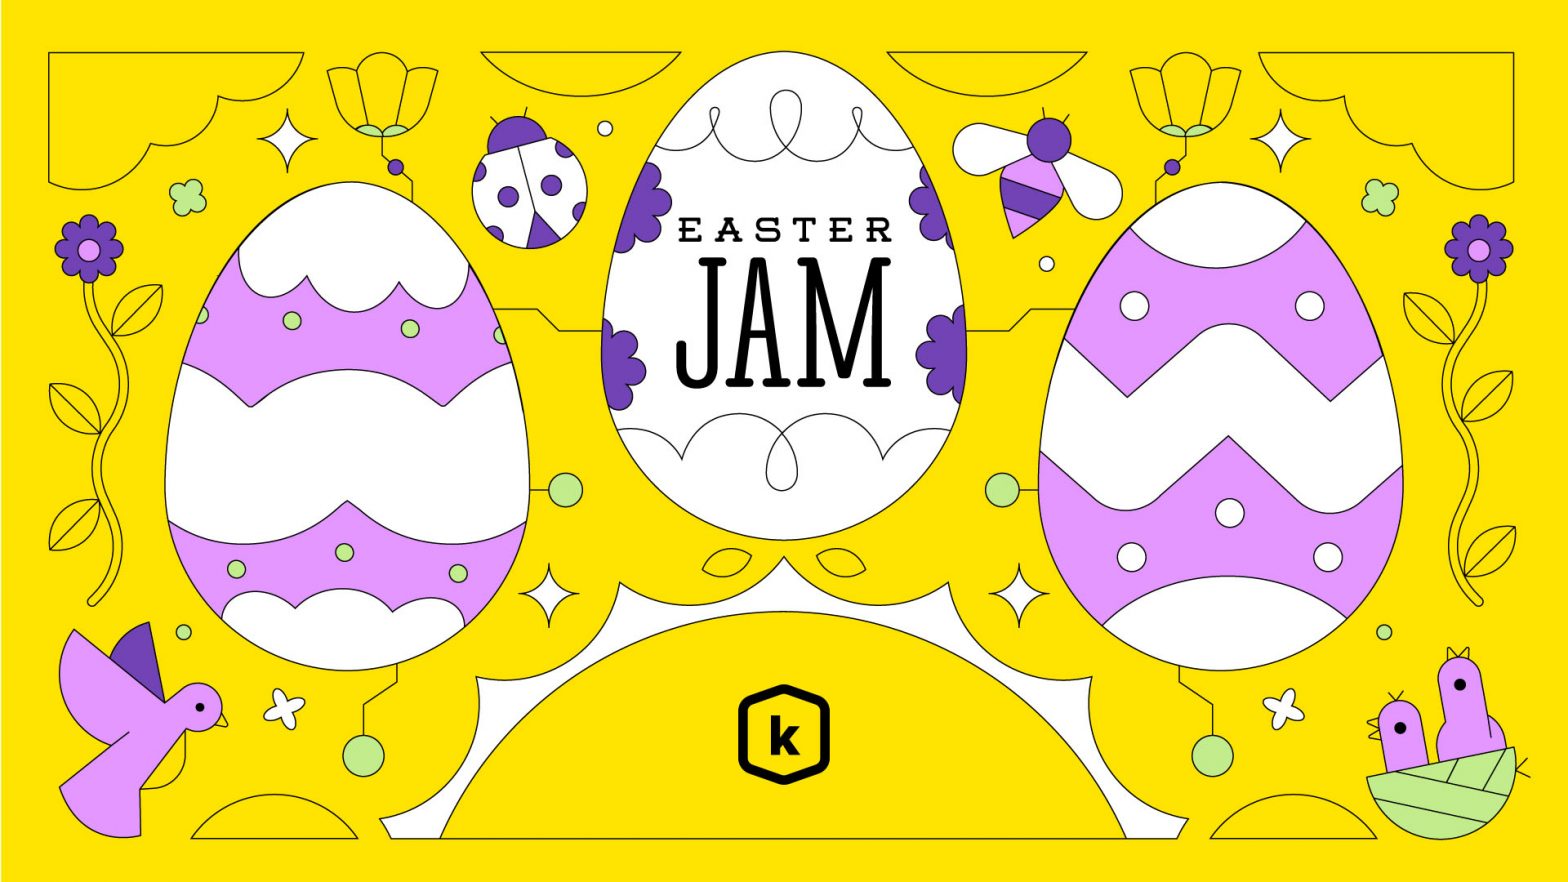 Easter Jam image